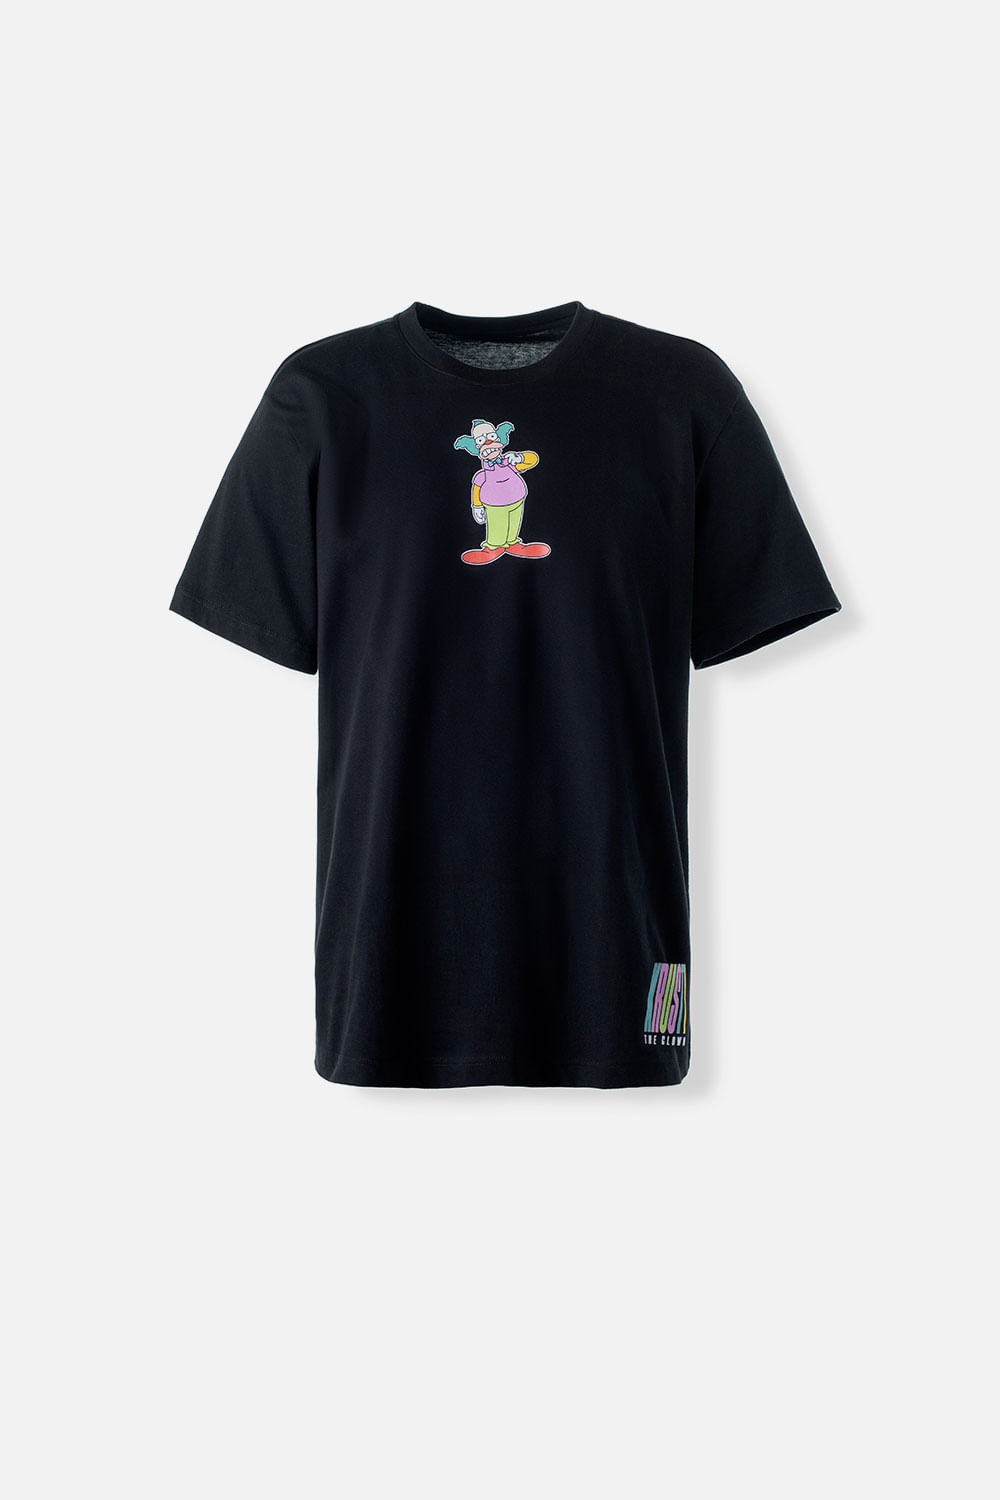 Camiseta de Krusty negra manga corta para hombre S-0